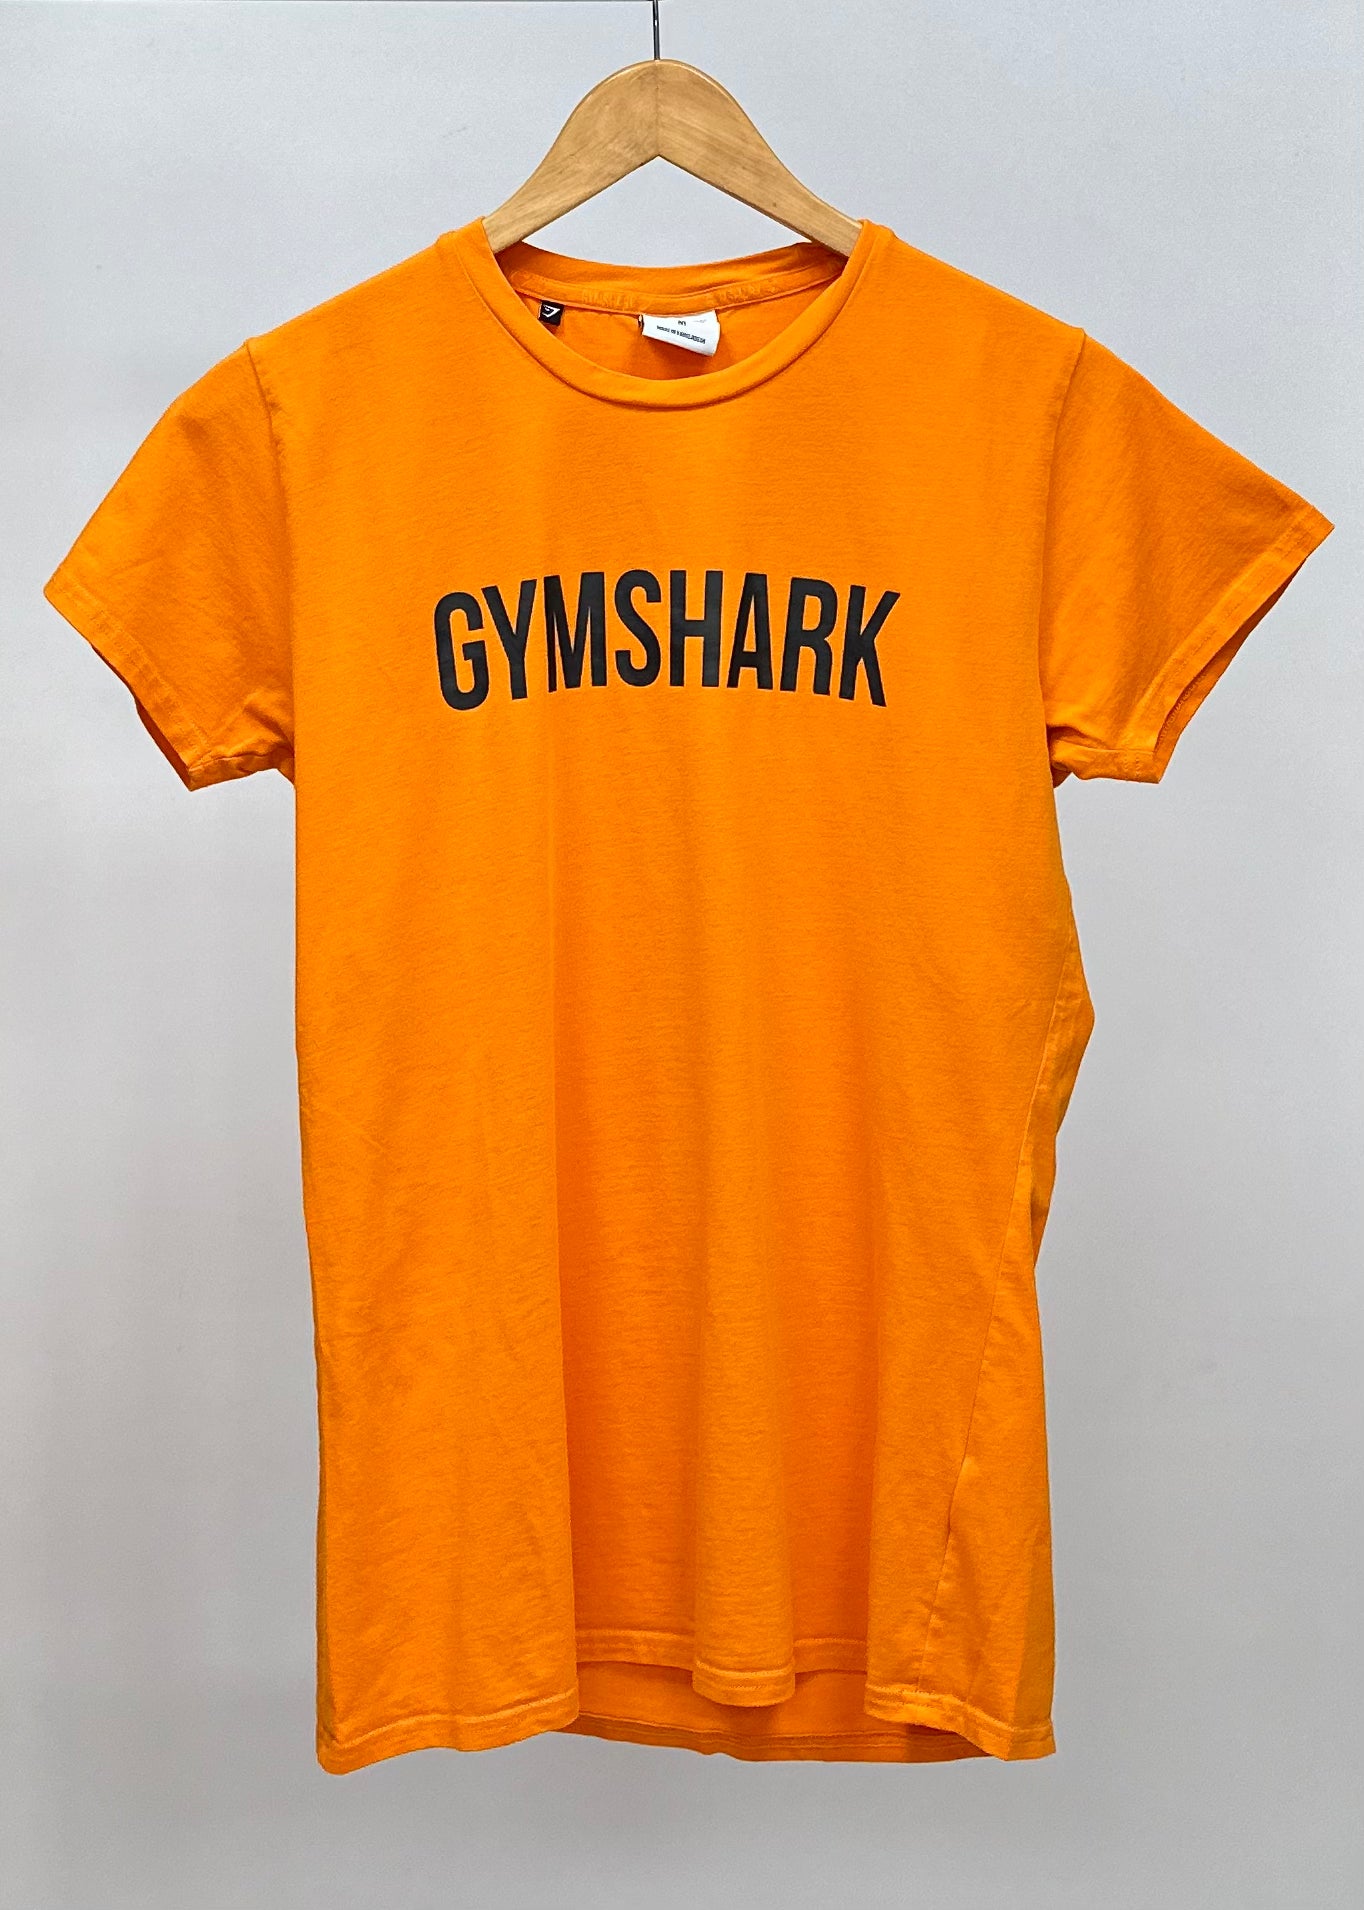 Camiseta de entrenamiento cuello redondo Gymshark 🏋🏽 color naranja intenso manga corta Talla M